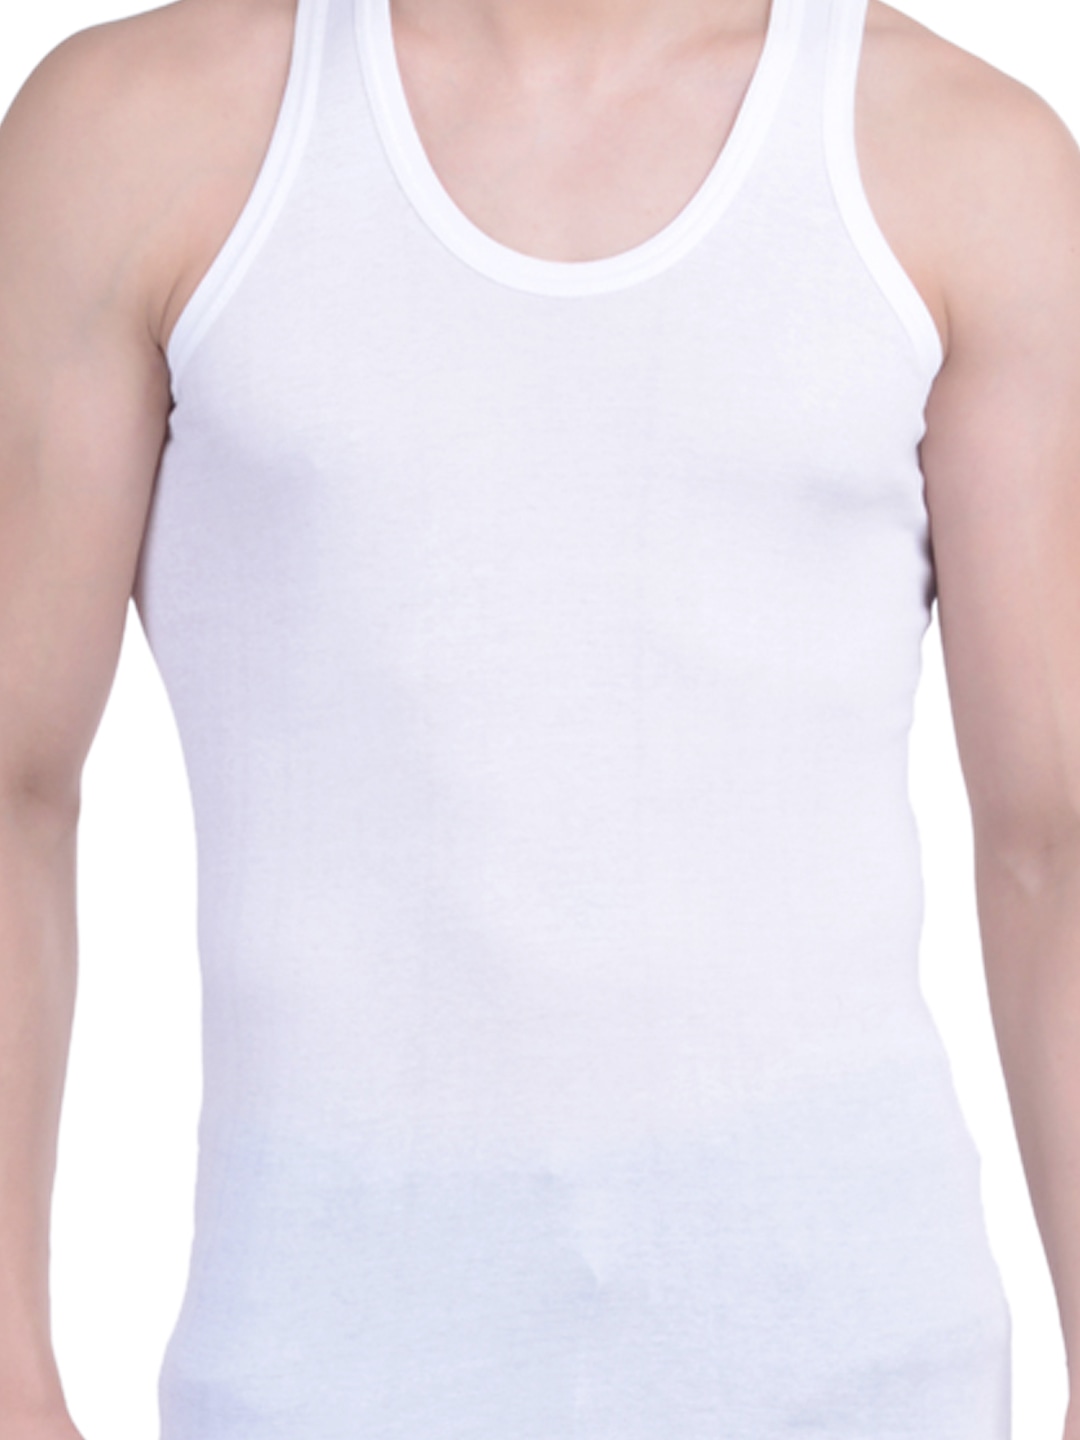 Clothing Innerwear Vests | Dollar Bigboss Pack of 5 White Innerwear Vests MDVE-05-PO5 - HQ77060